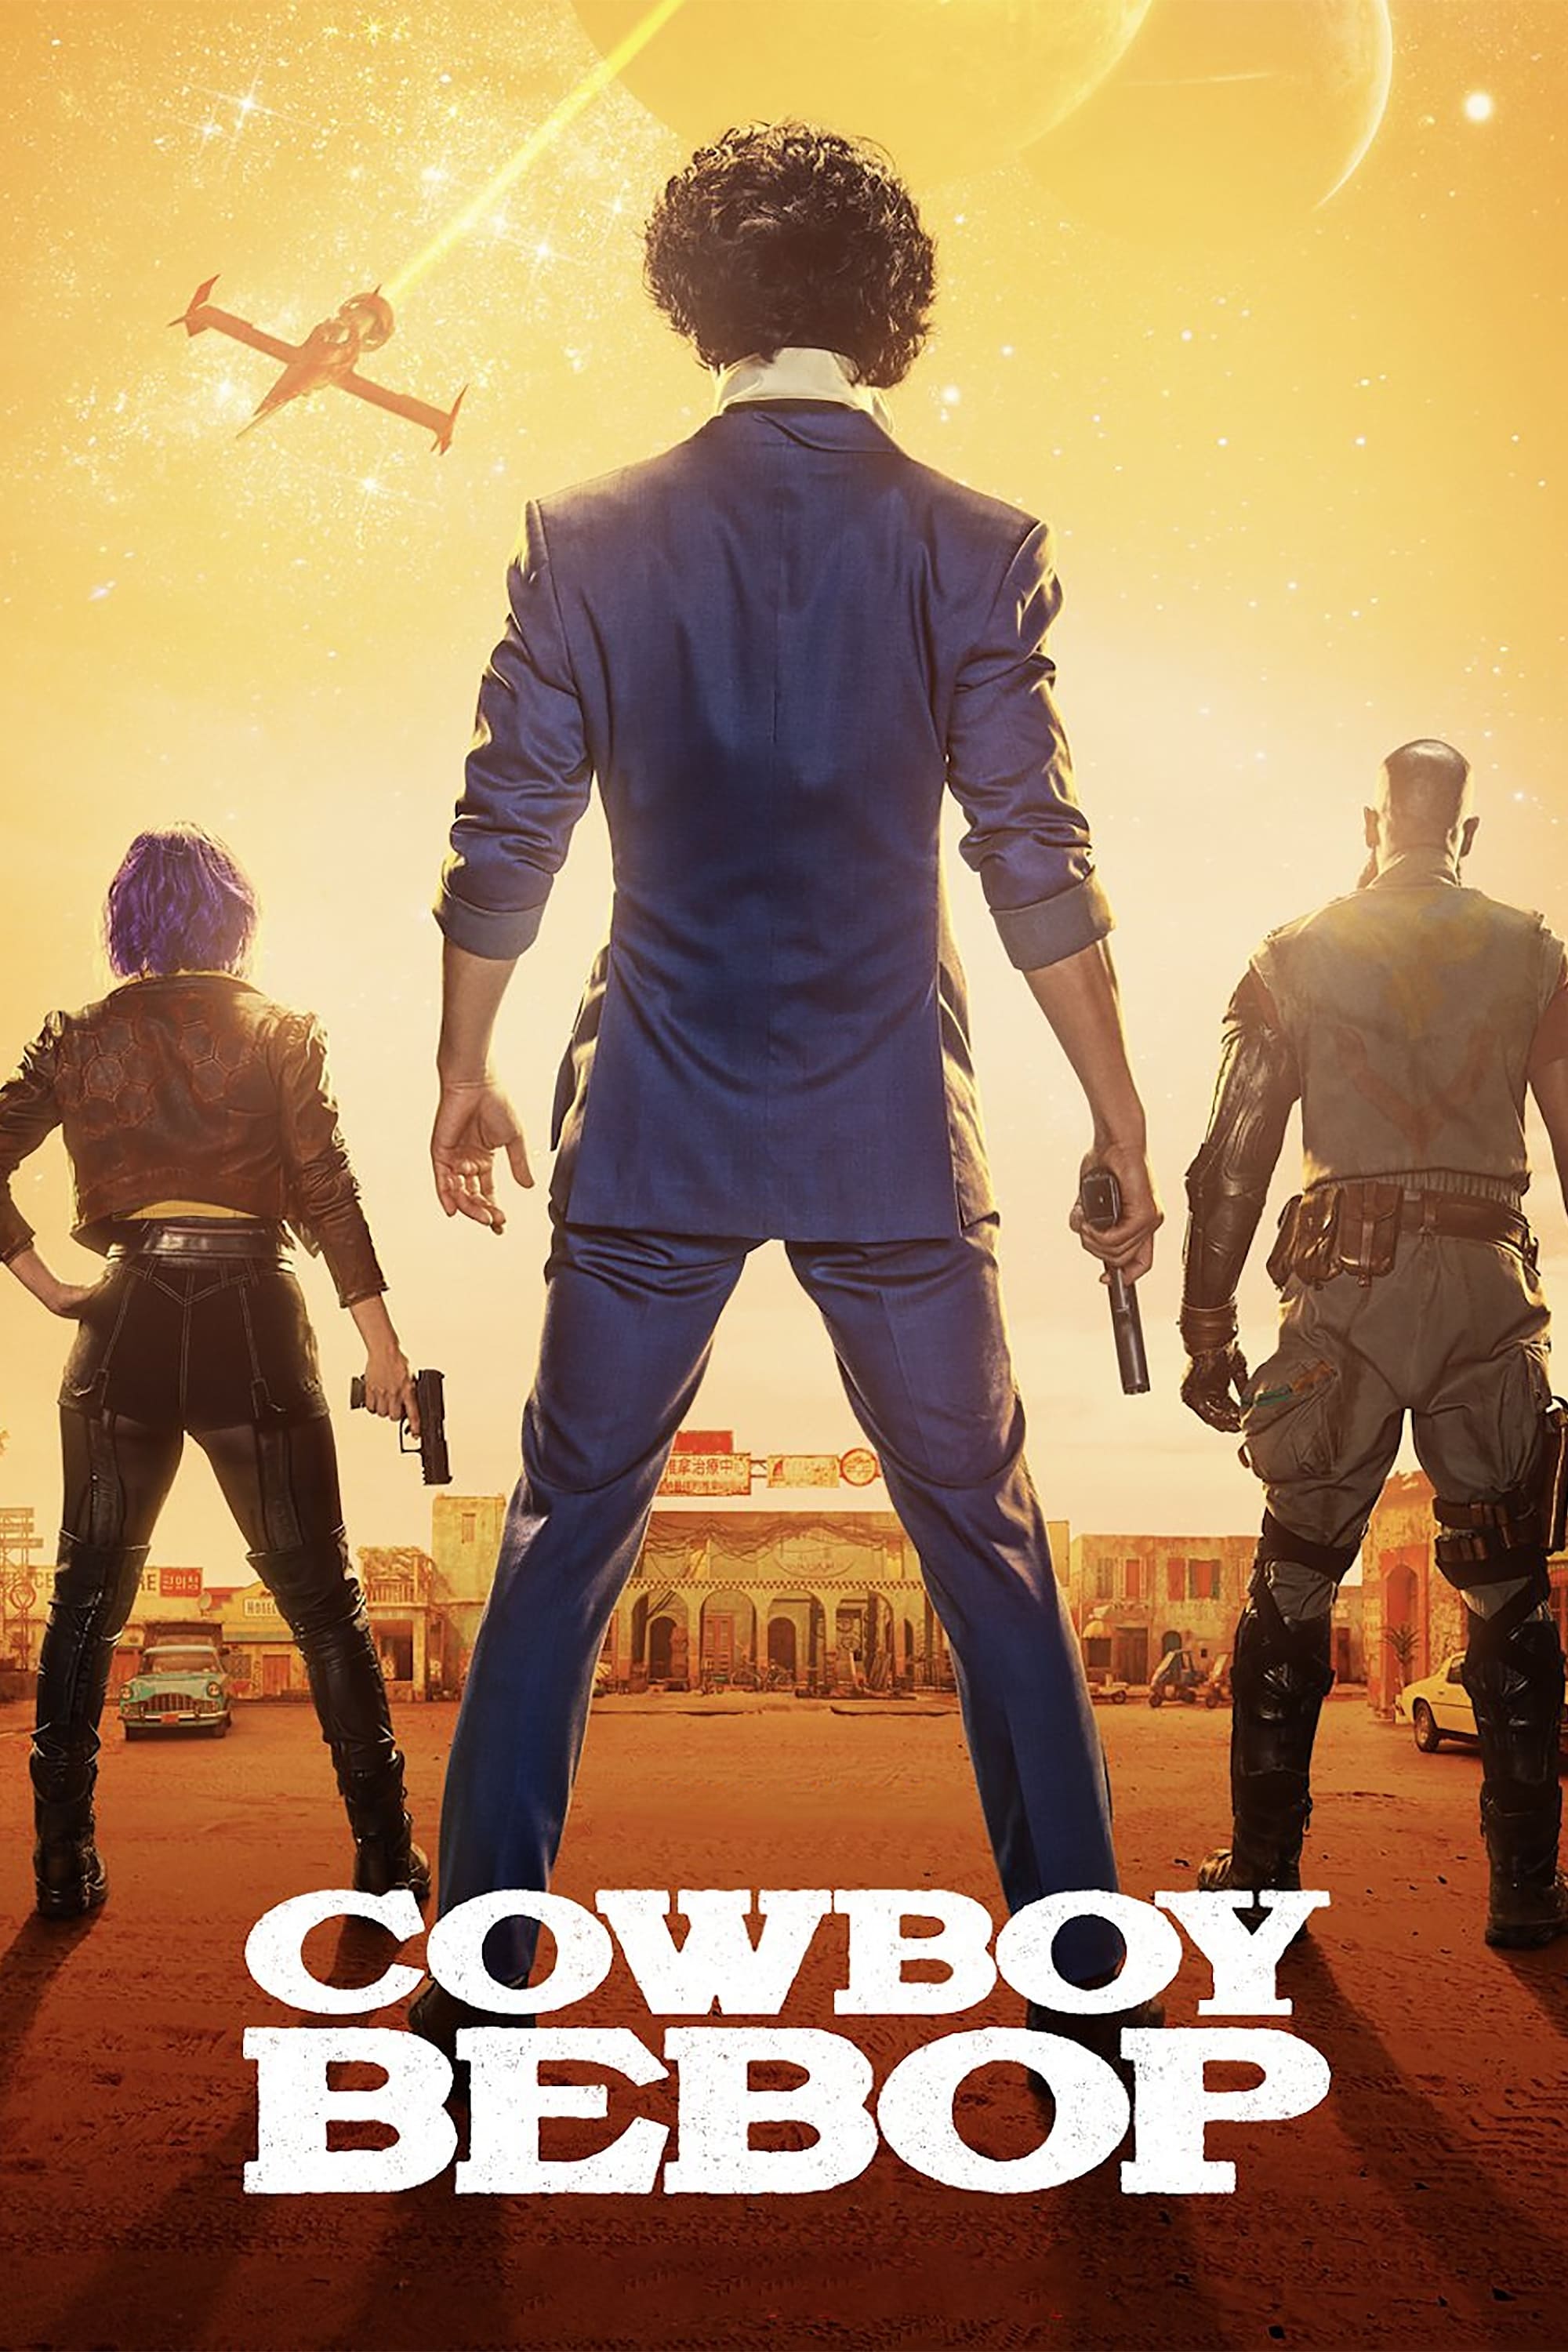 Cowboy Bebop TV Shows About Bounty Hunter